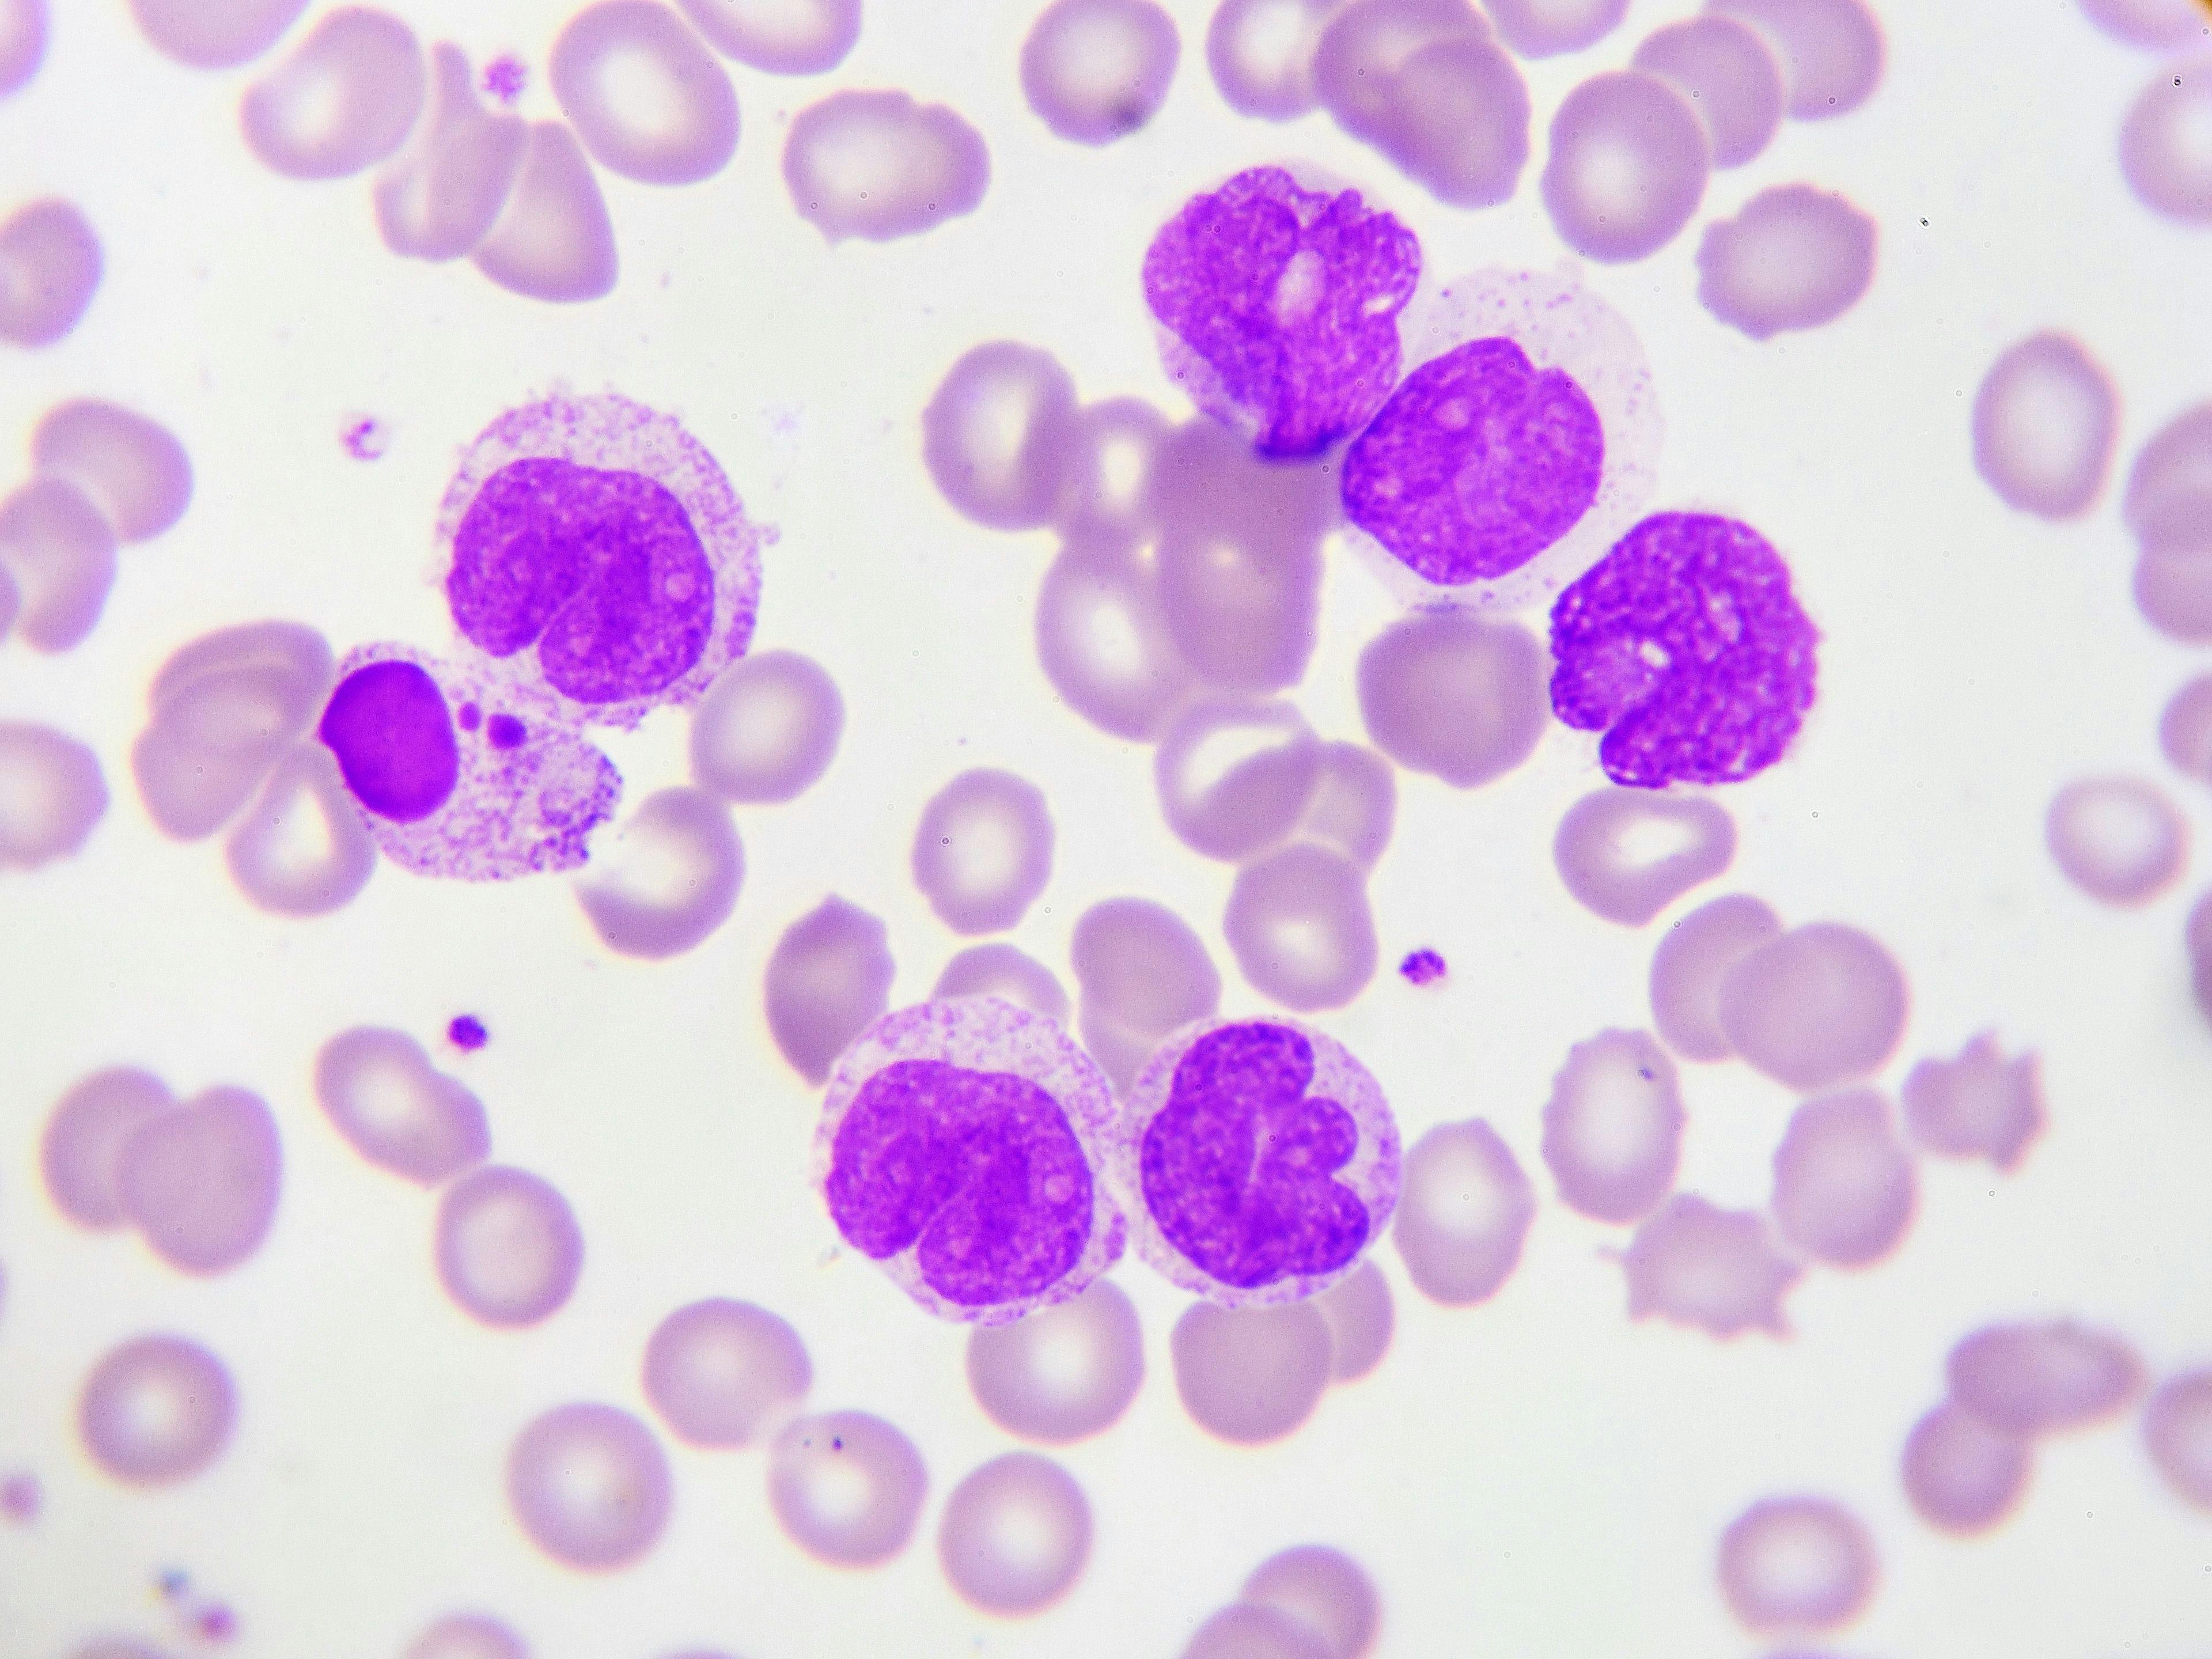 FDA Grants Fast Track Designation to Aptose’s HM43239 for Acute Myeloid Leukemia